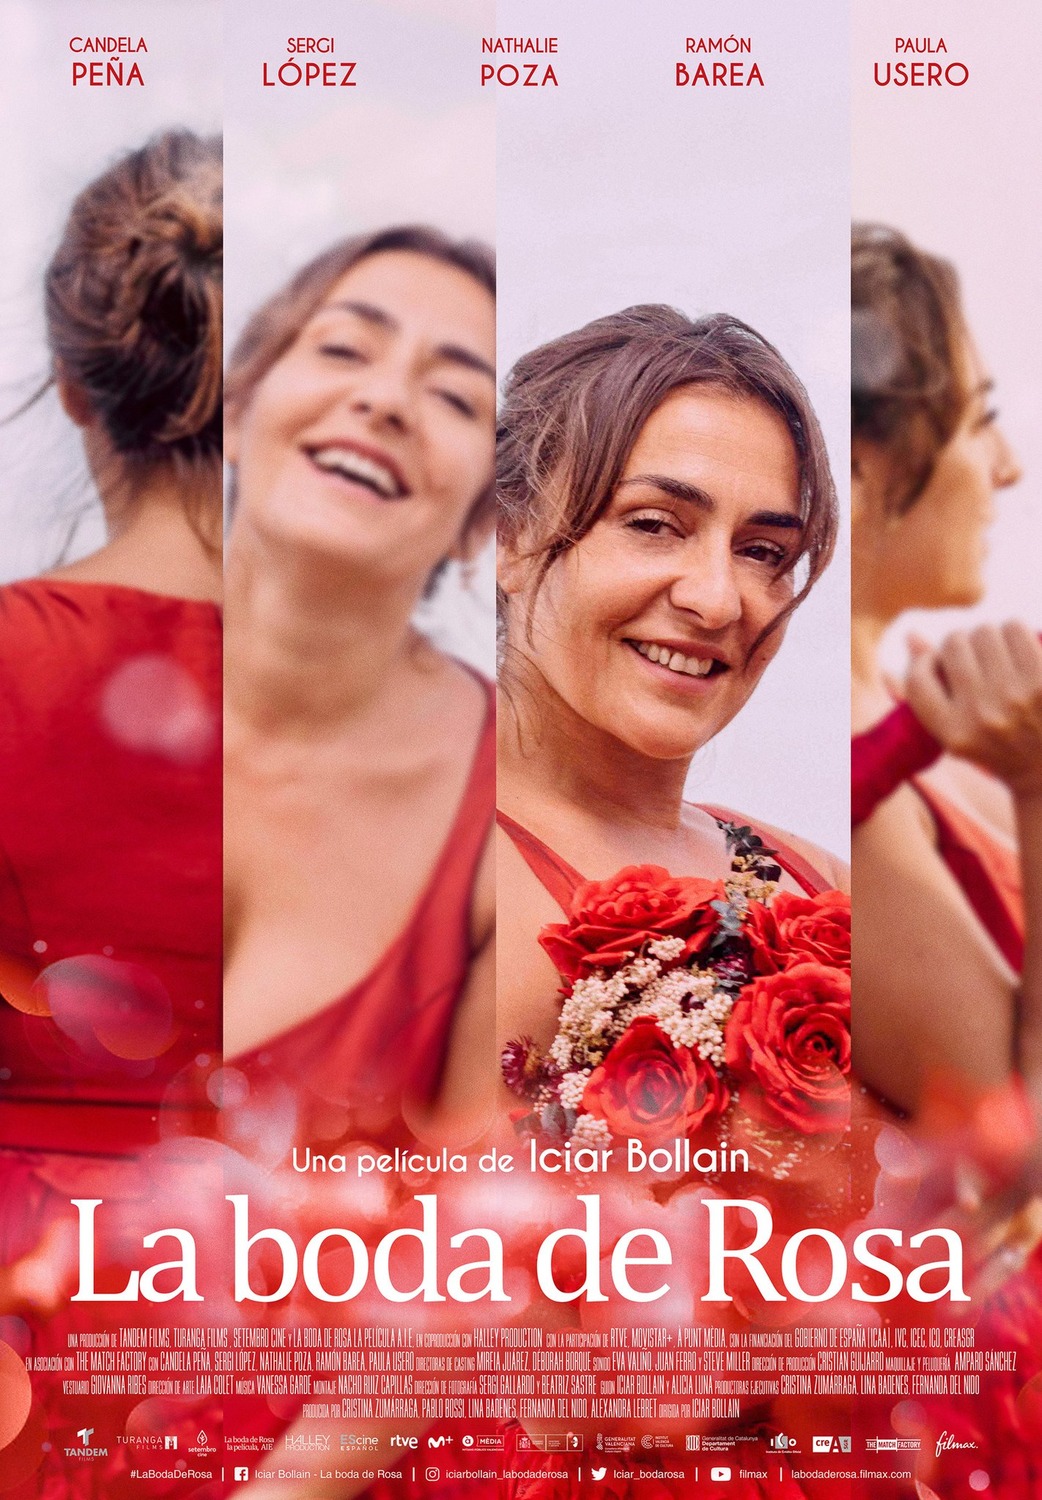 Extra Large Movie Poster Image for La boda de Rosa 